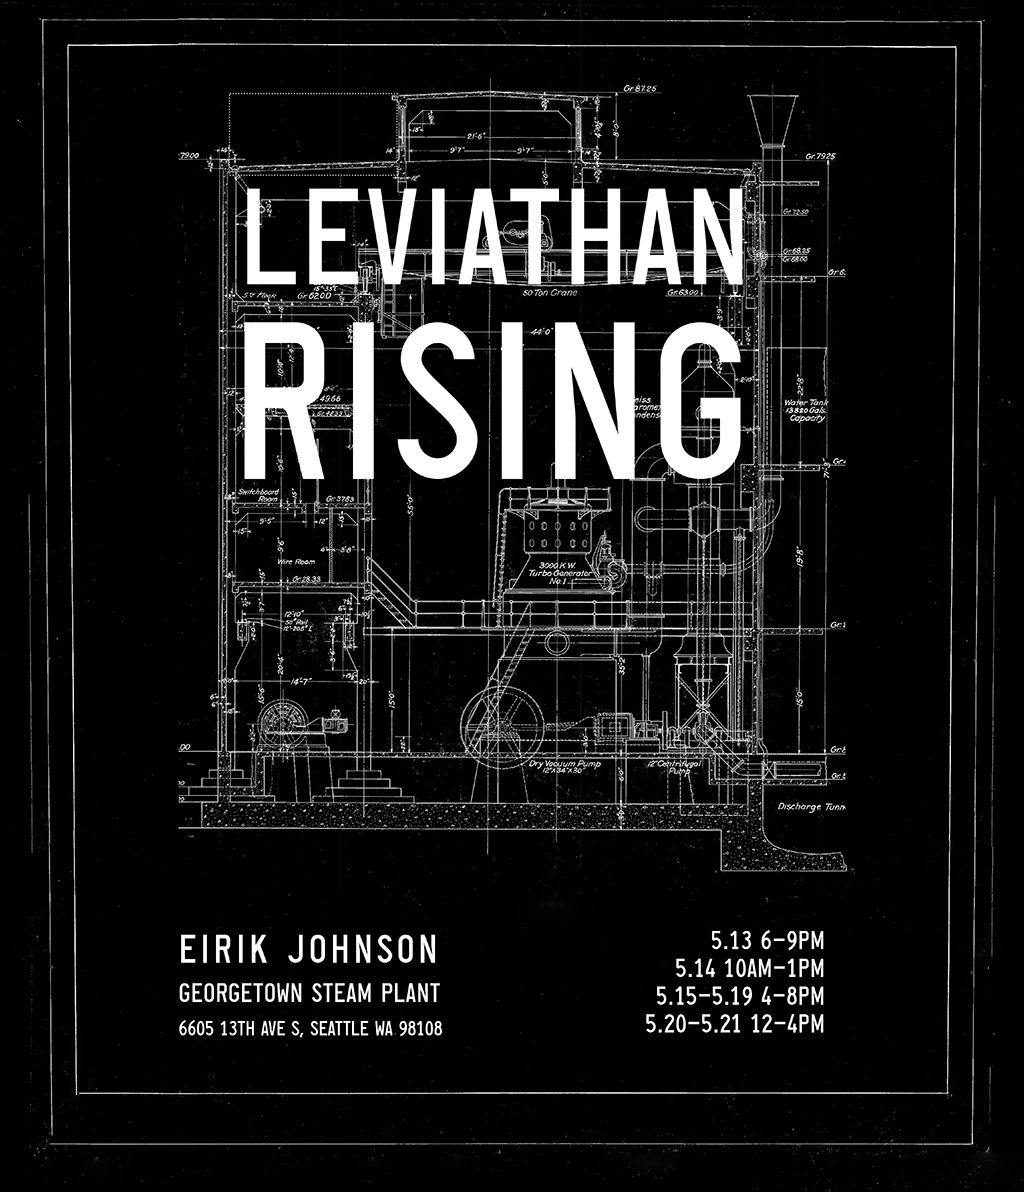 Eirik Johnson Photographer Interview - Leviathan Rising